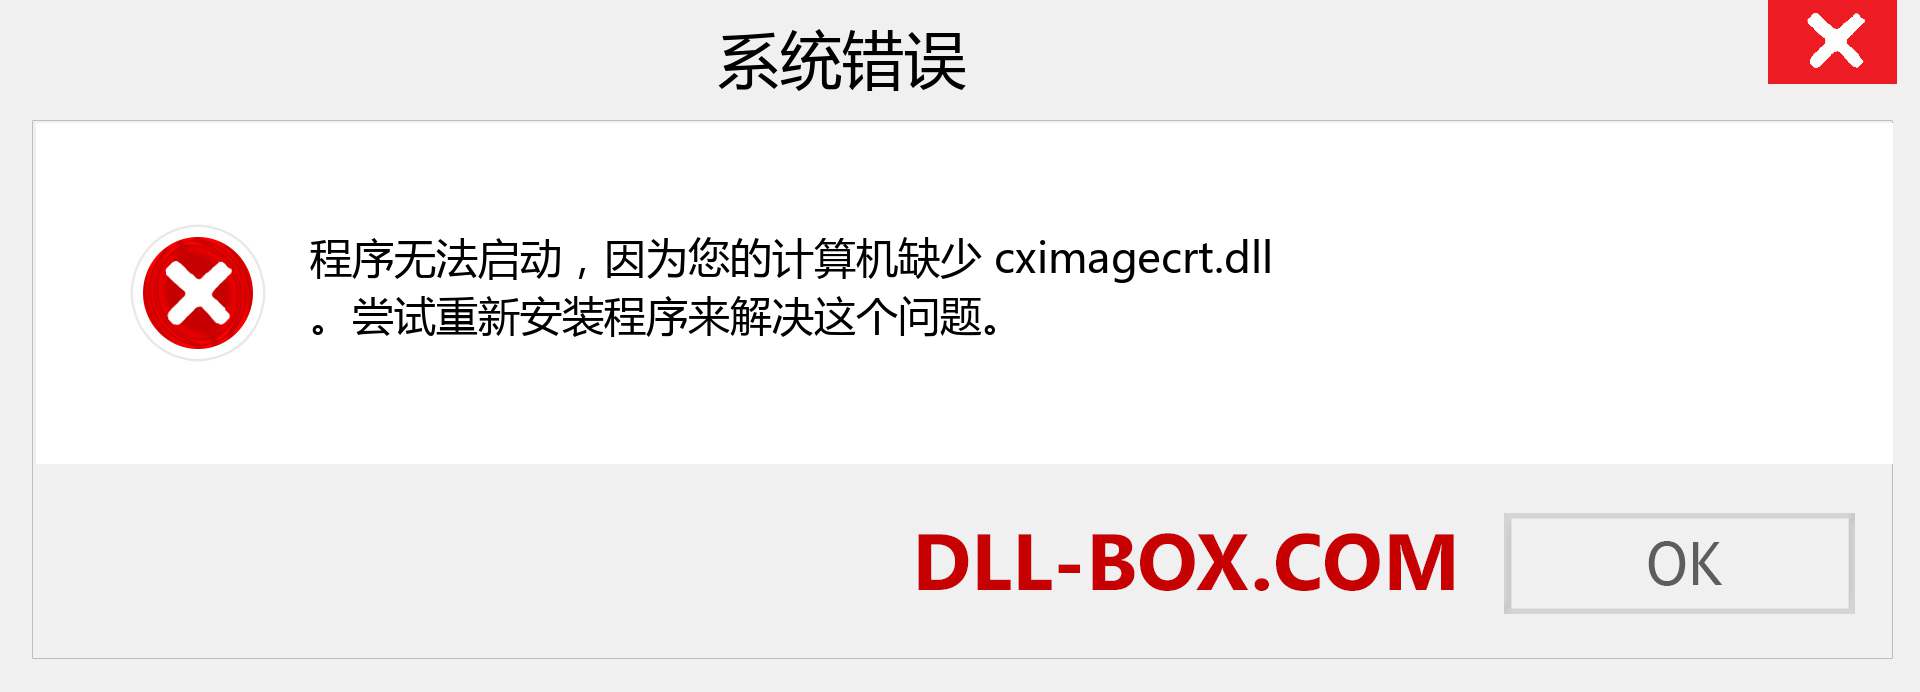 cximagecrt.dll 文件丢失？。 适用于 Windows 7、8、10 的下载 - 修复 Windows、照片、图像上的 cximagecrt dll 丢失错误